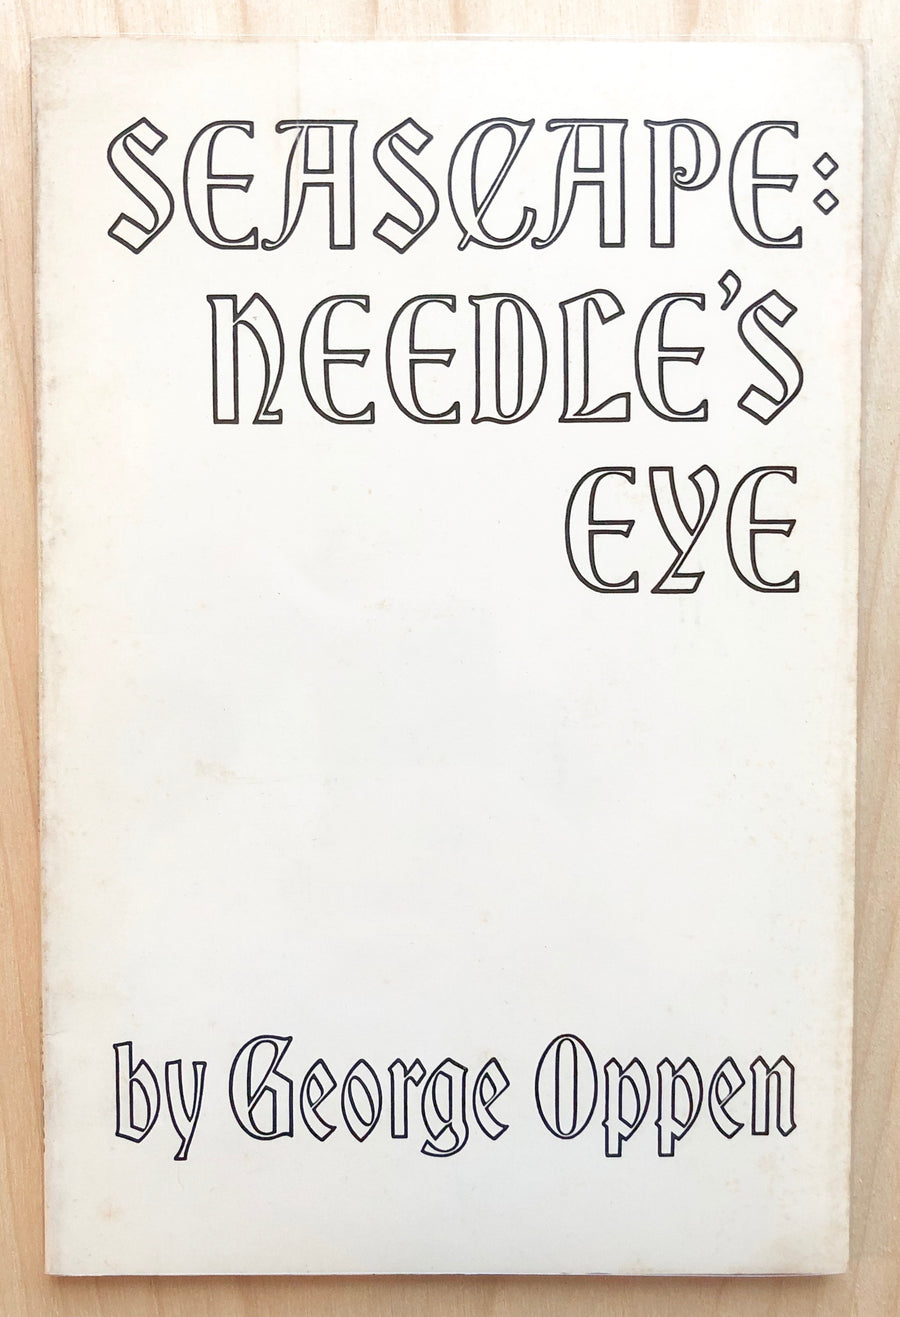 SEASCAPE: NEEDLE'S EYE by George Oppen